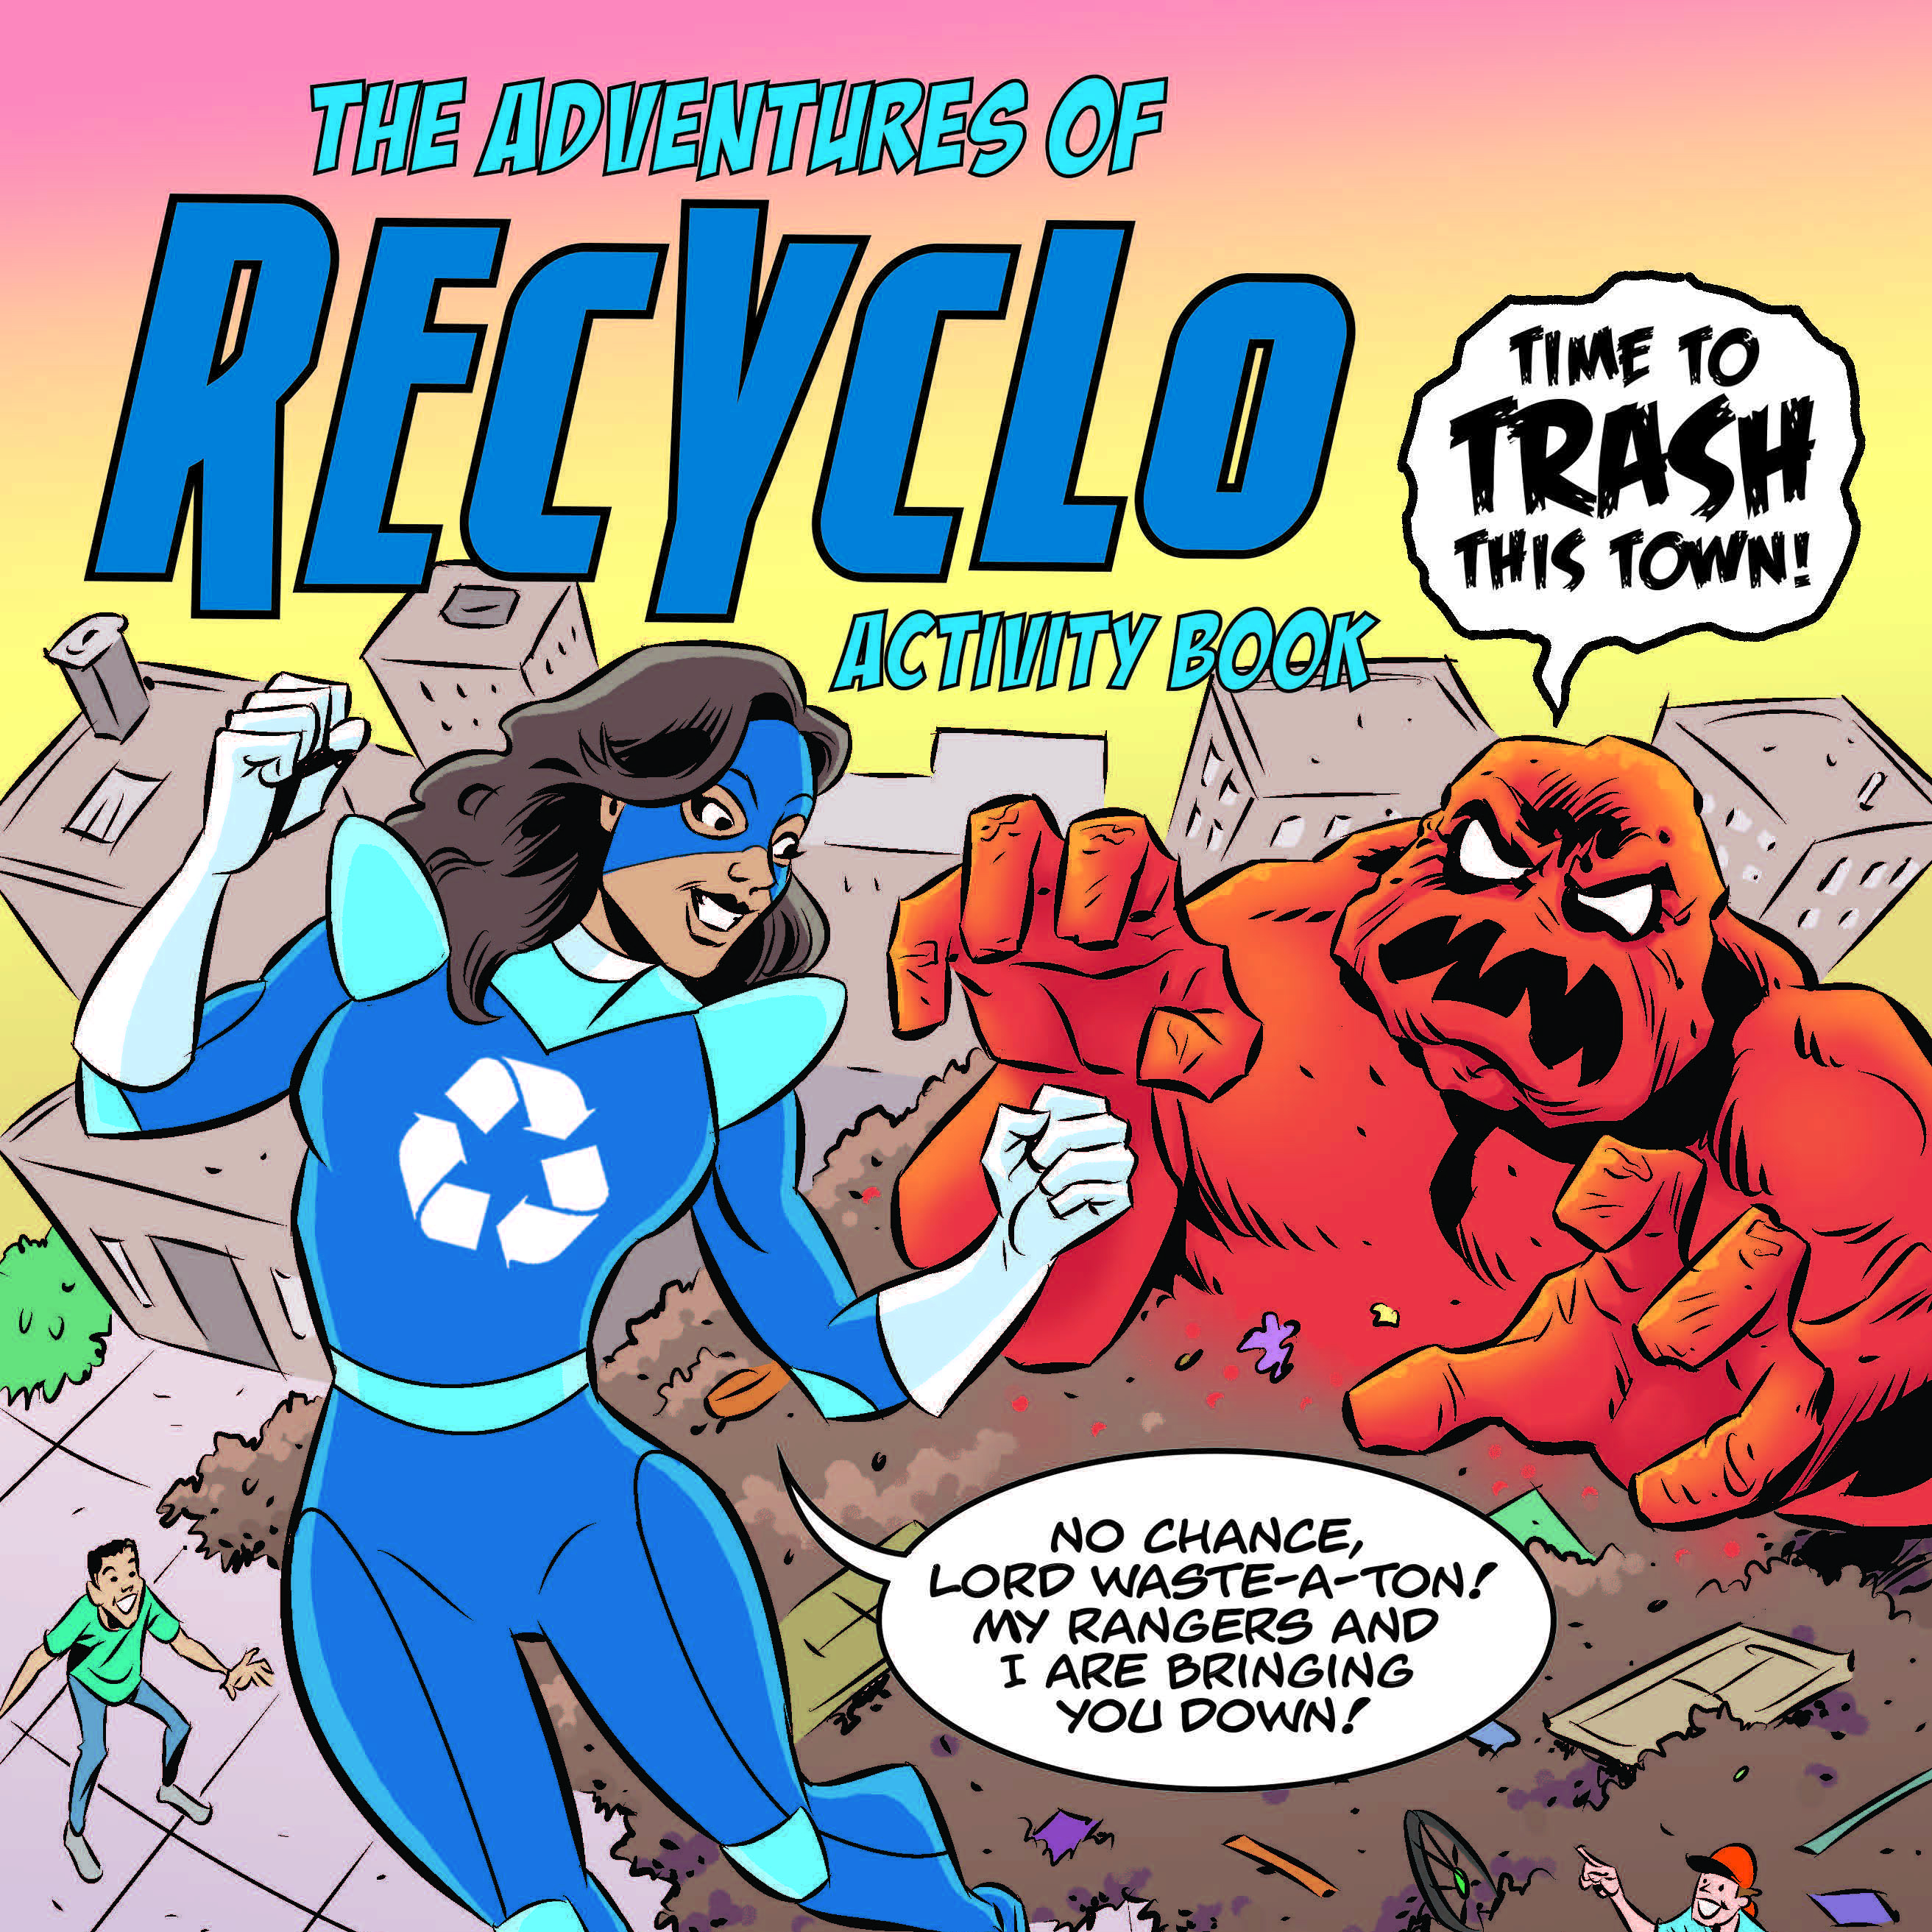 Recycling activity book thumbnail